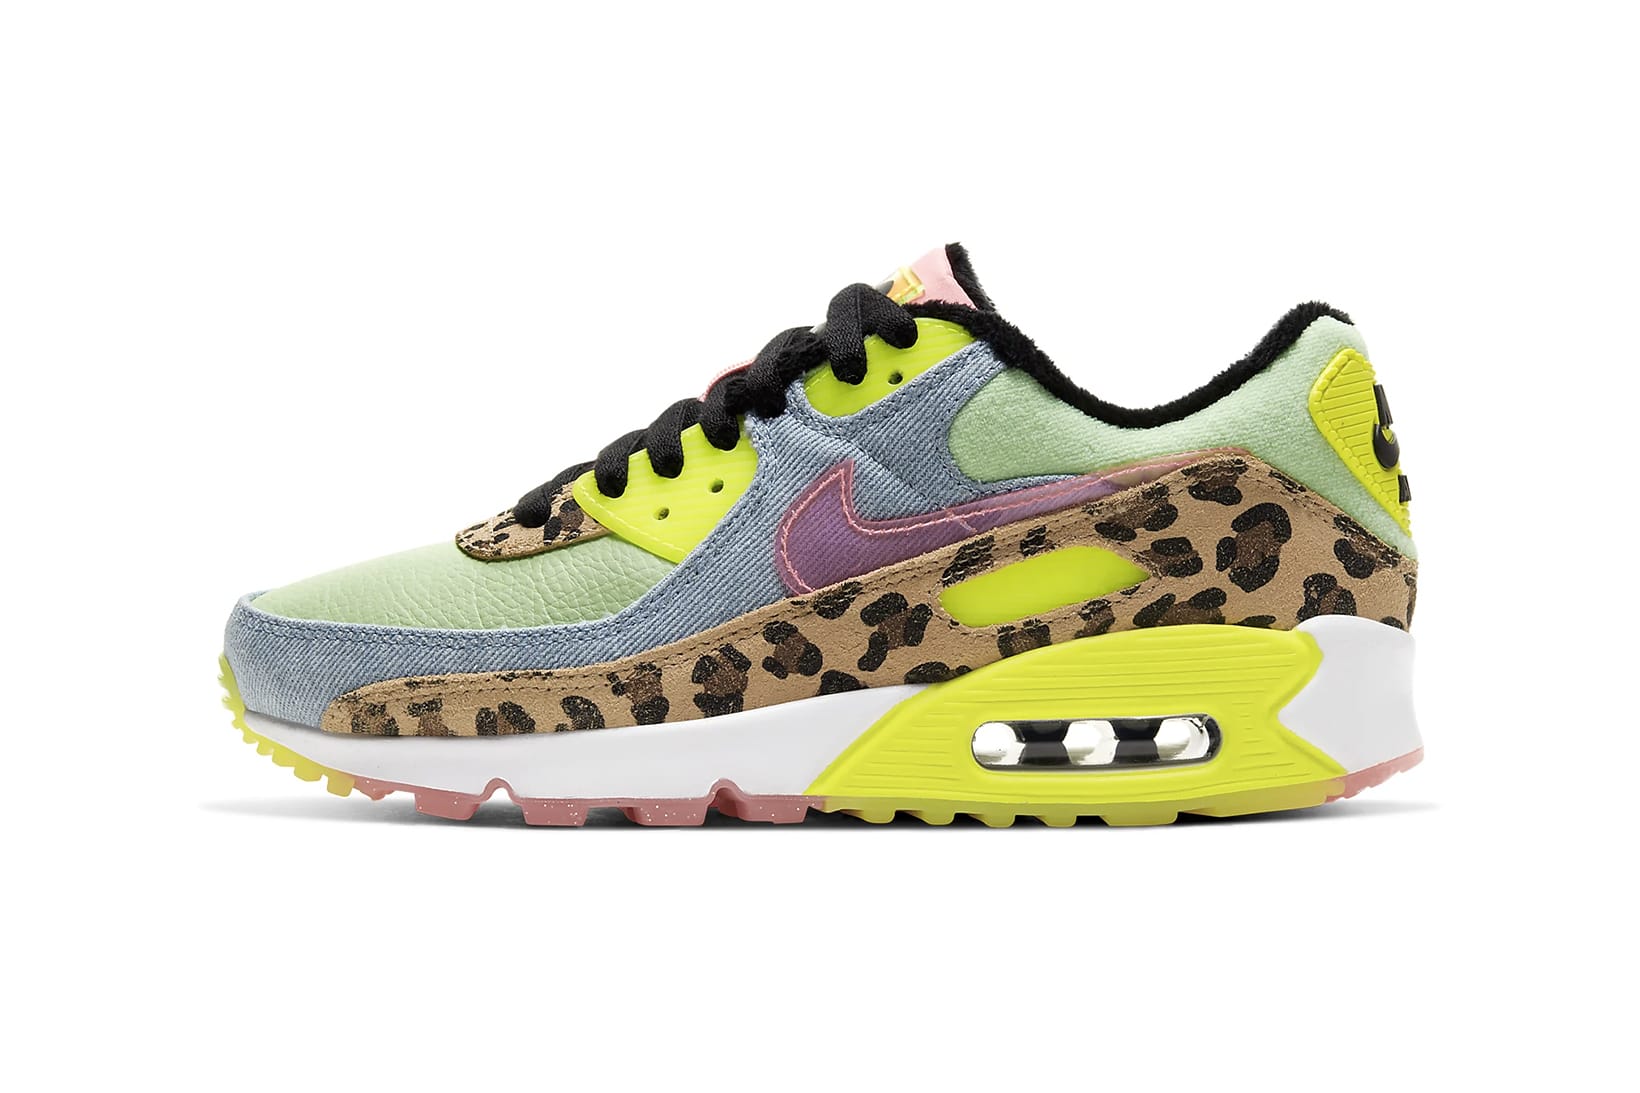 leopard print womens tennis shoes